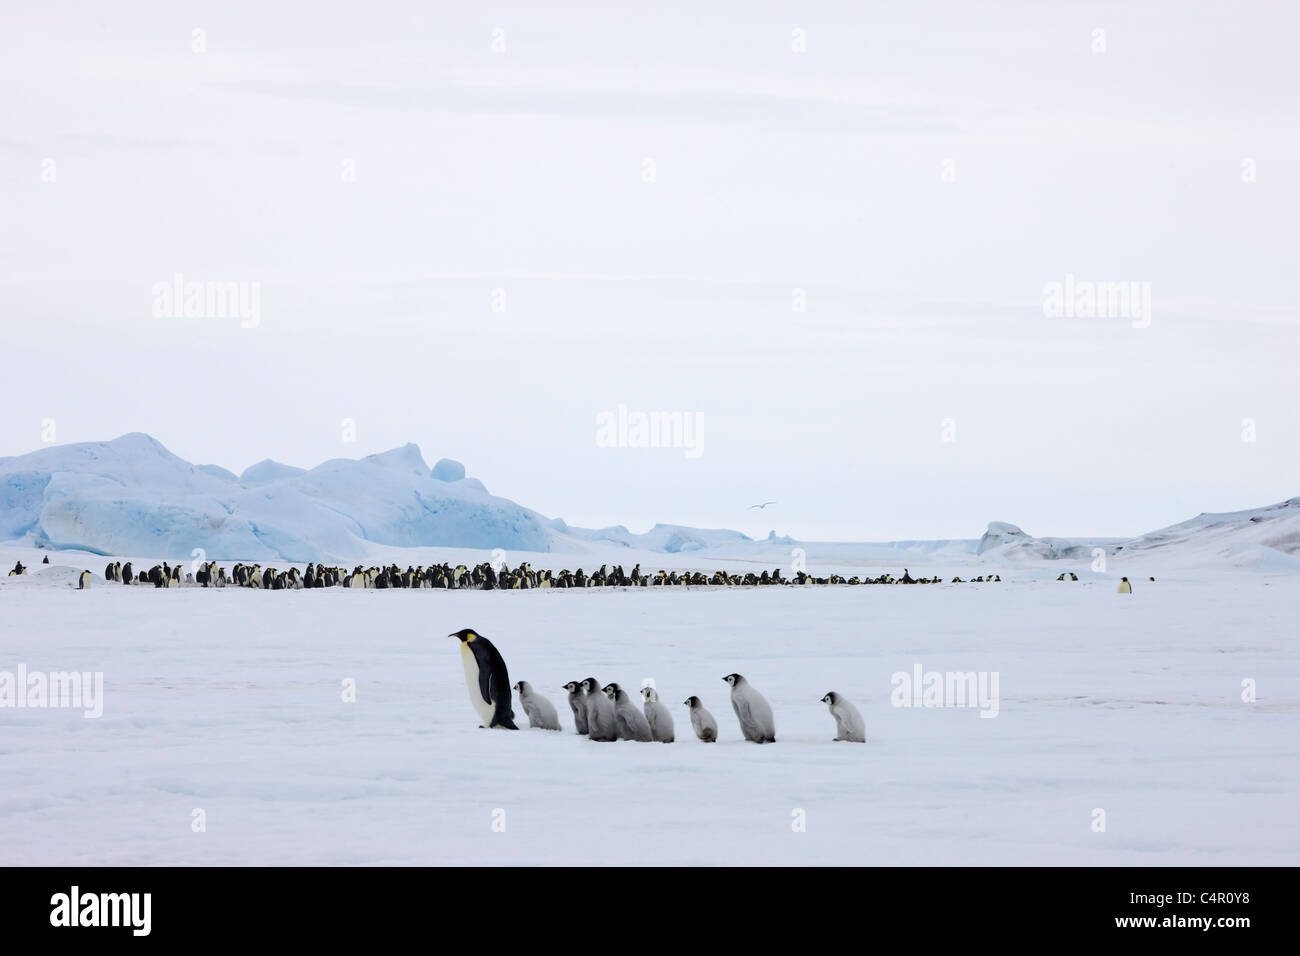 Colonie de manchots empereur, Snow Hill Island, l'Antarctique Banque D'Images